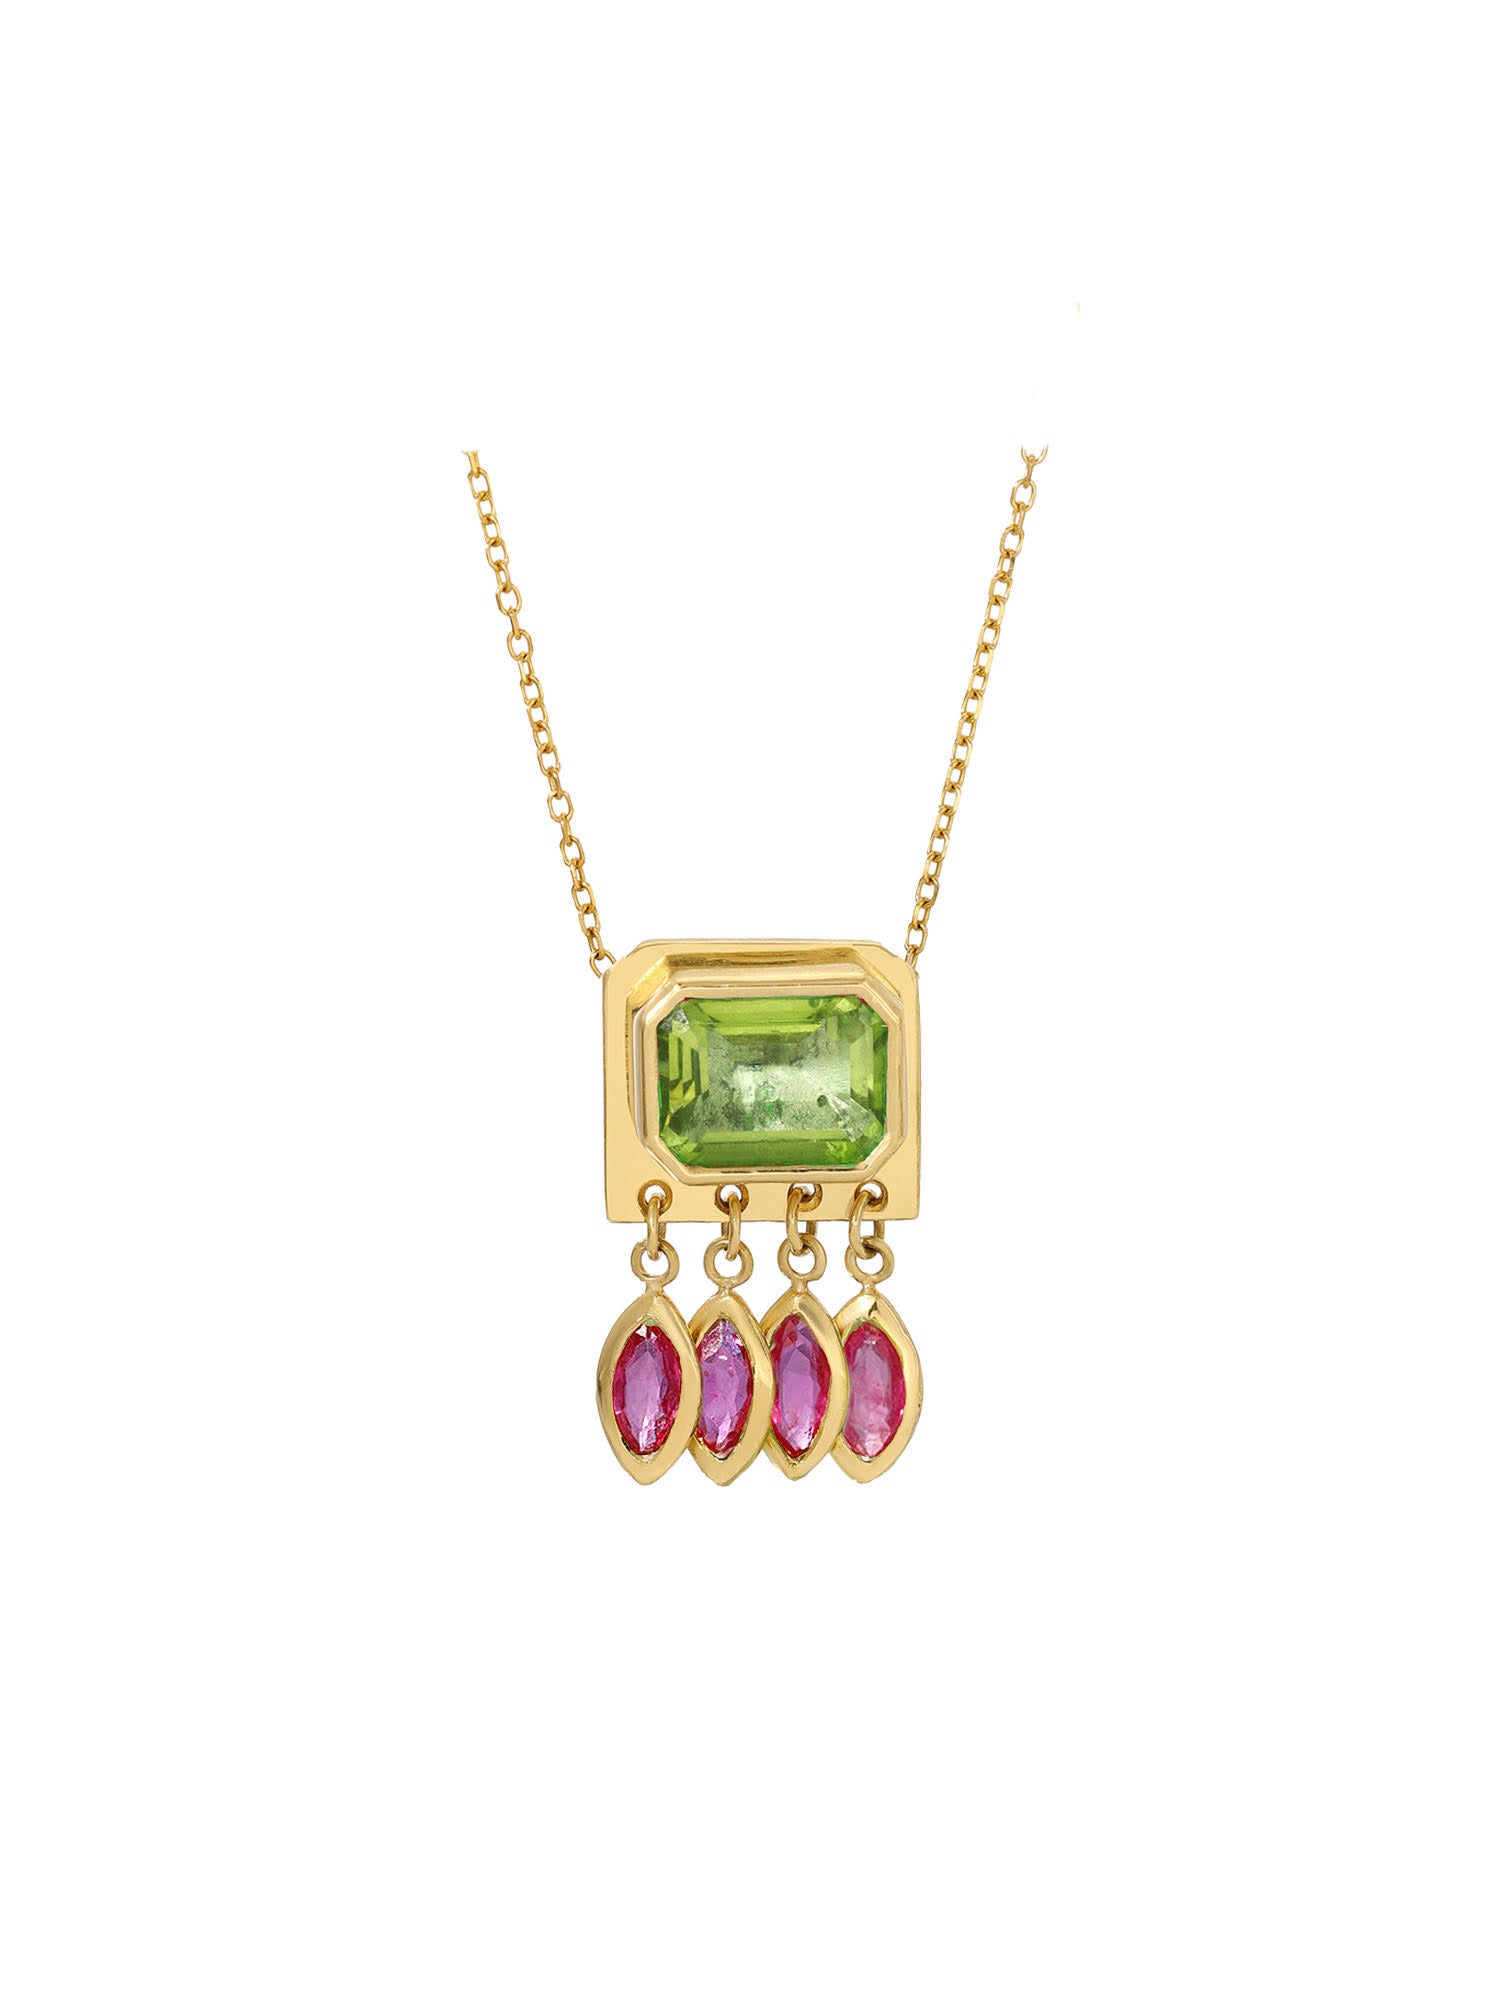 Lumen Necklace in Green Tourmaline Pendant Christina Magdolna Jewelry   